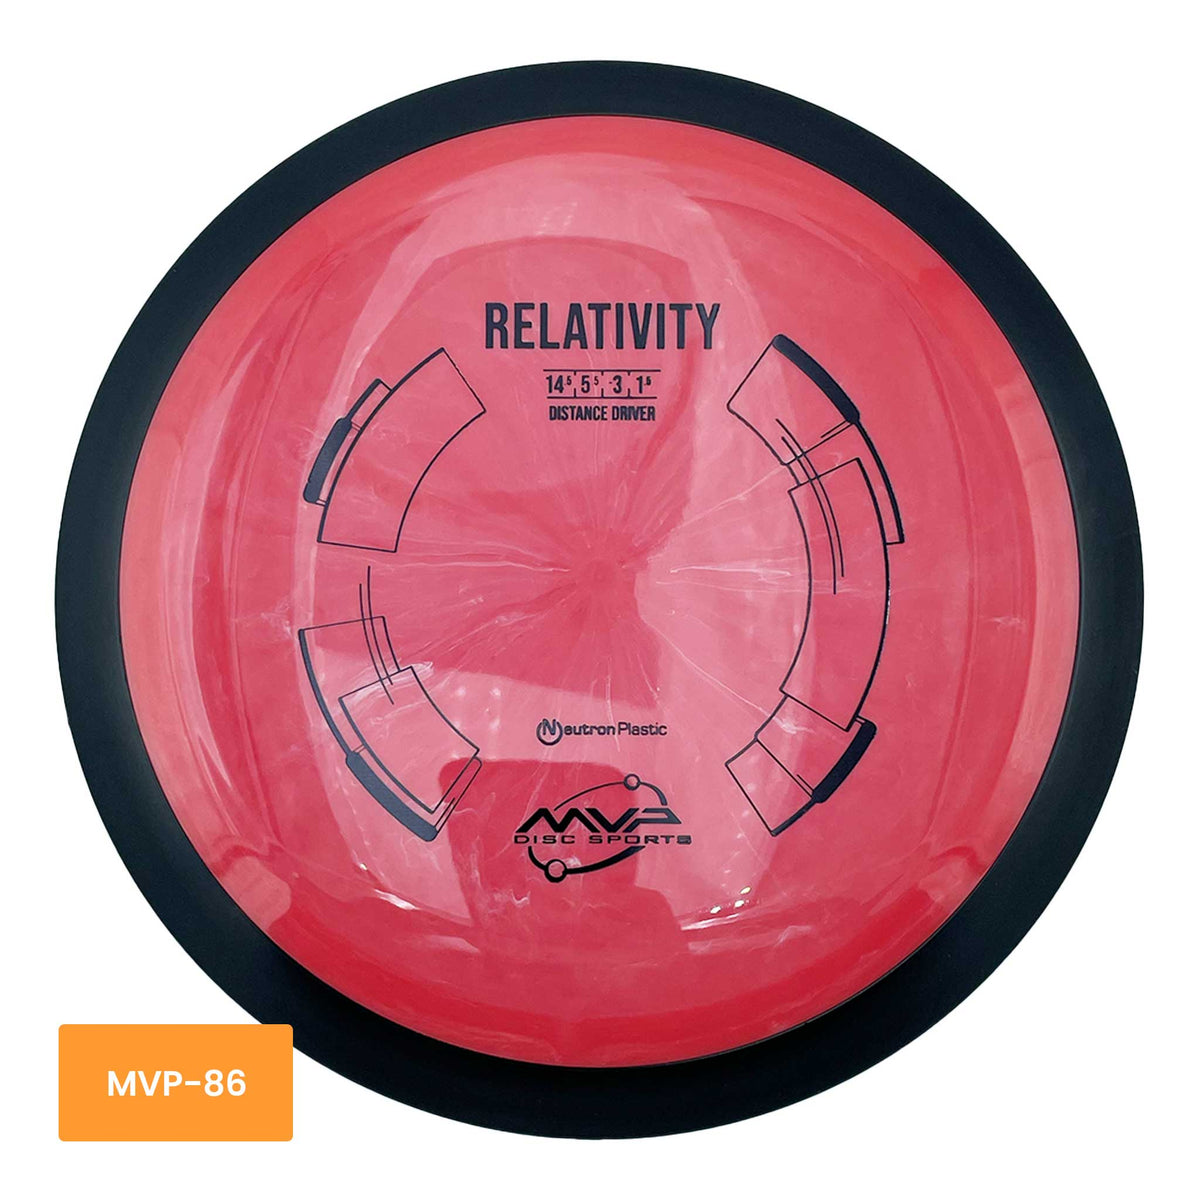 MVP Disc Sports Neutron Relativity distance driver - Red